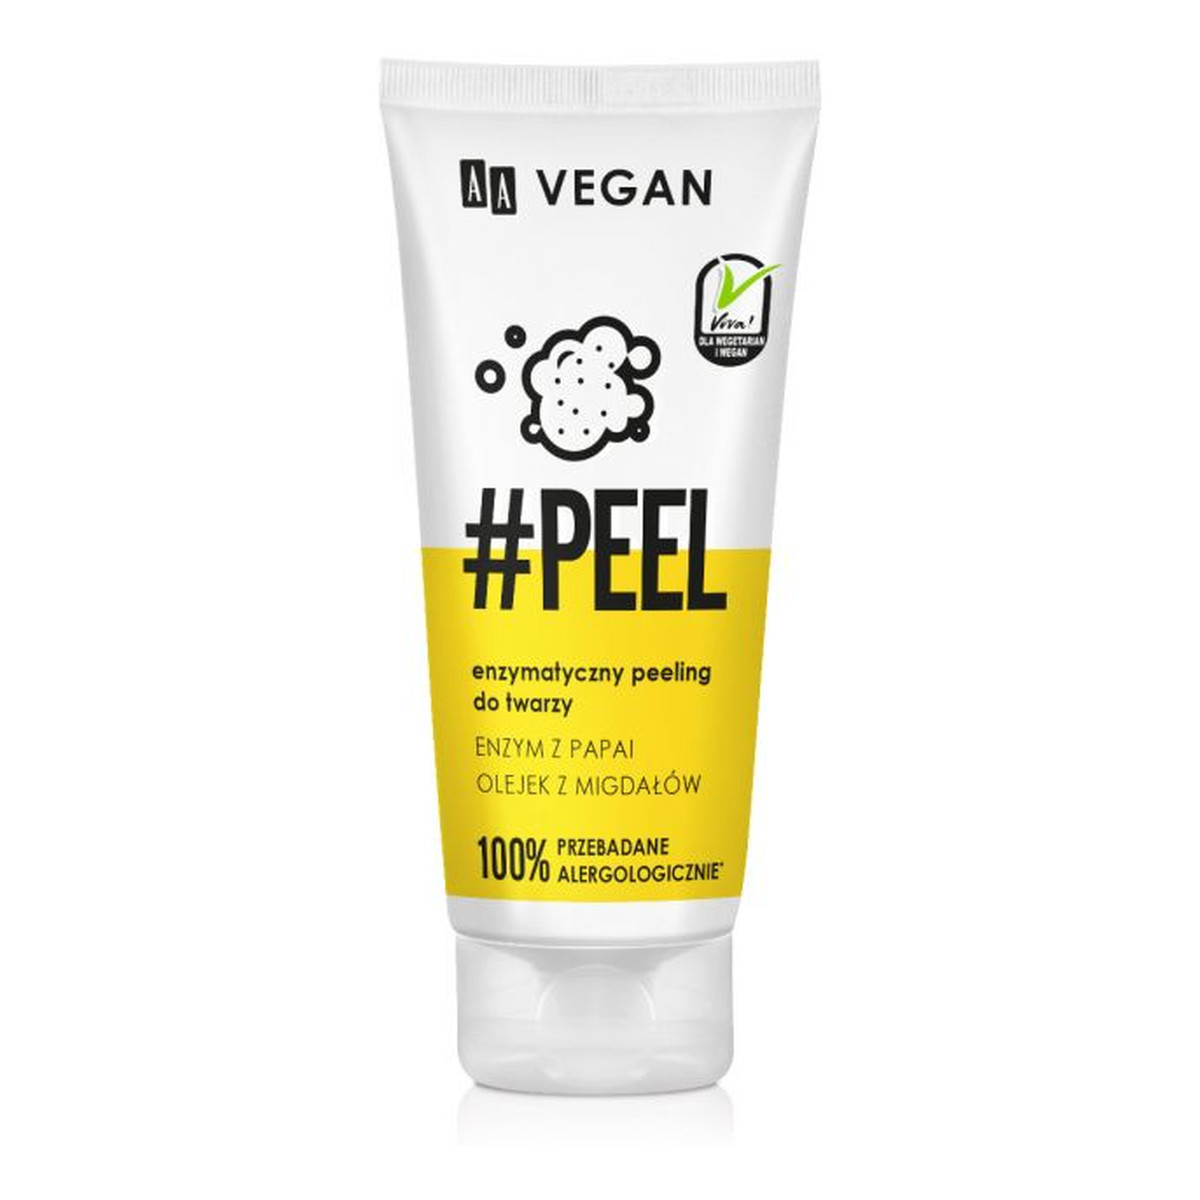 AA Vegan #Peel enzymatyczny peeling do twarzy 75ml